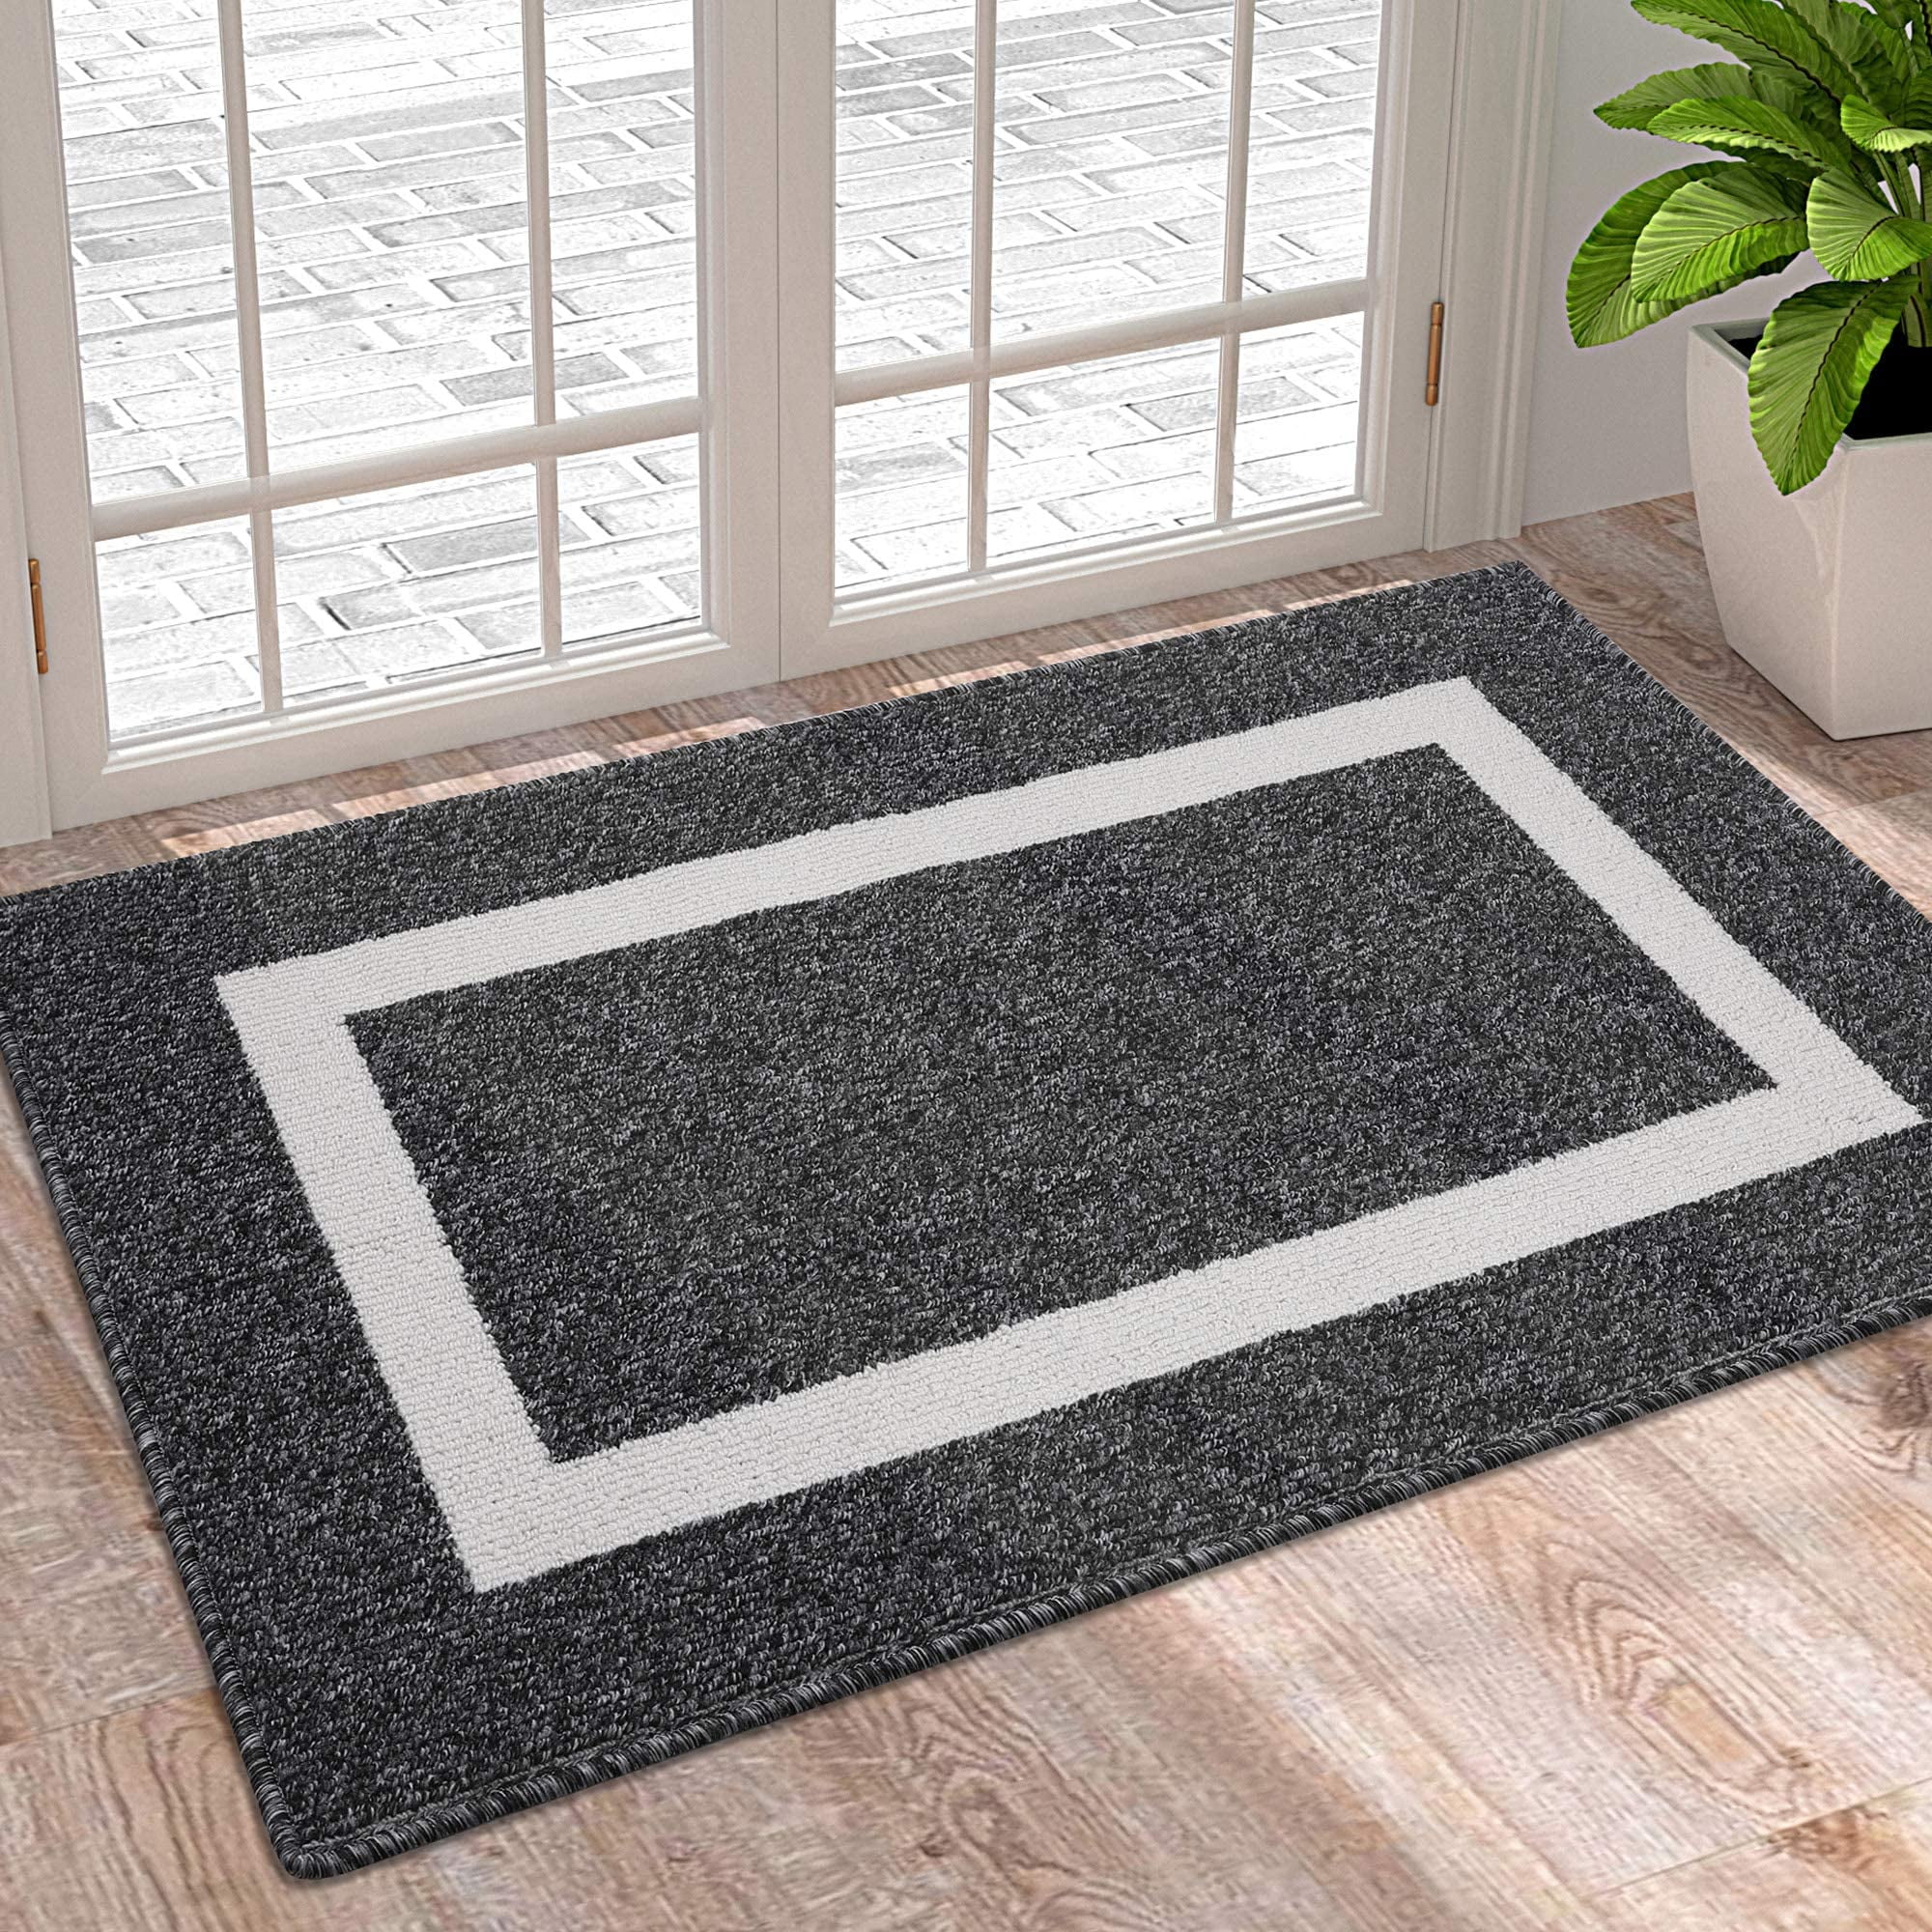 Door Floor Mat Rug Carpet Red Durable Non-Slip For Home Entrance Office Kitchen 